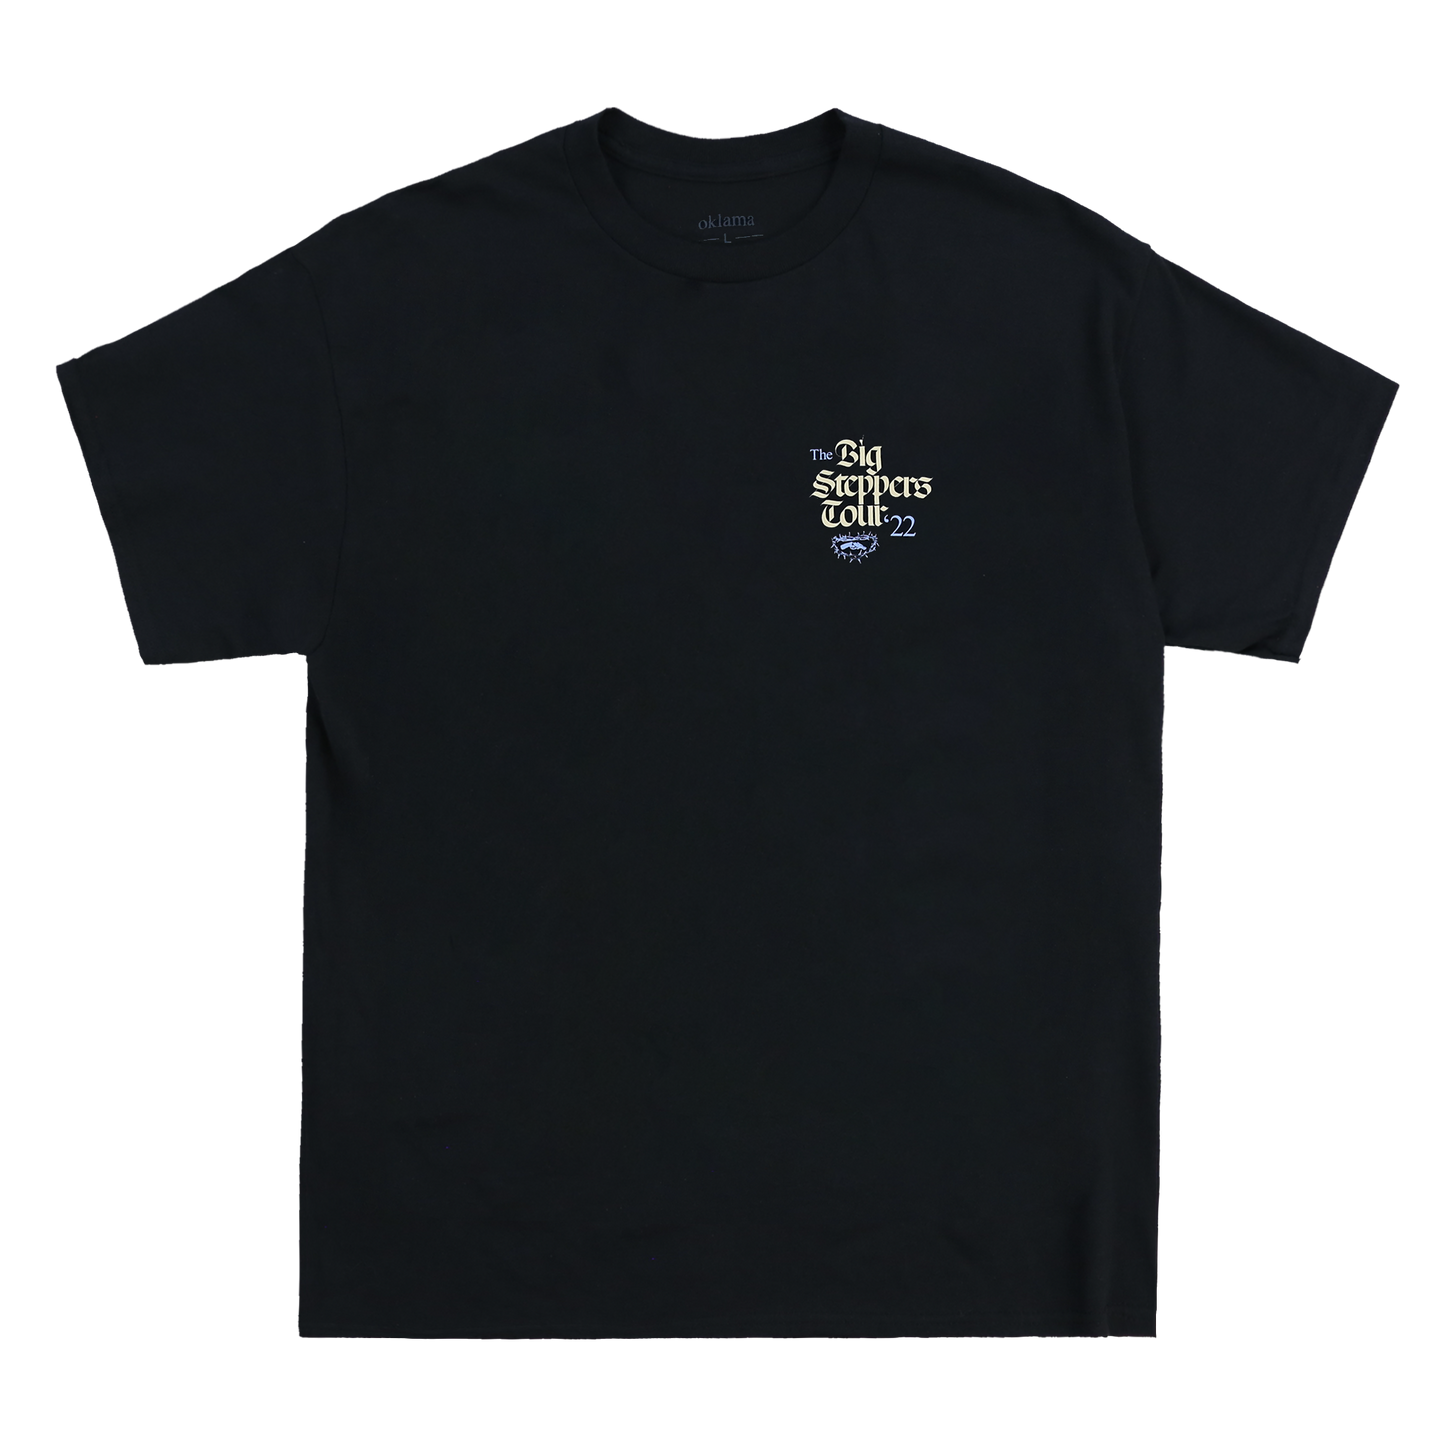 The Big Steppers Tour T-Shirt - Black